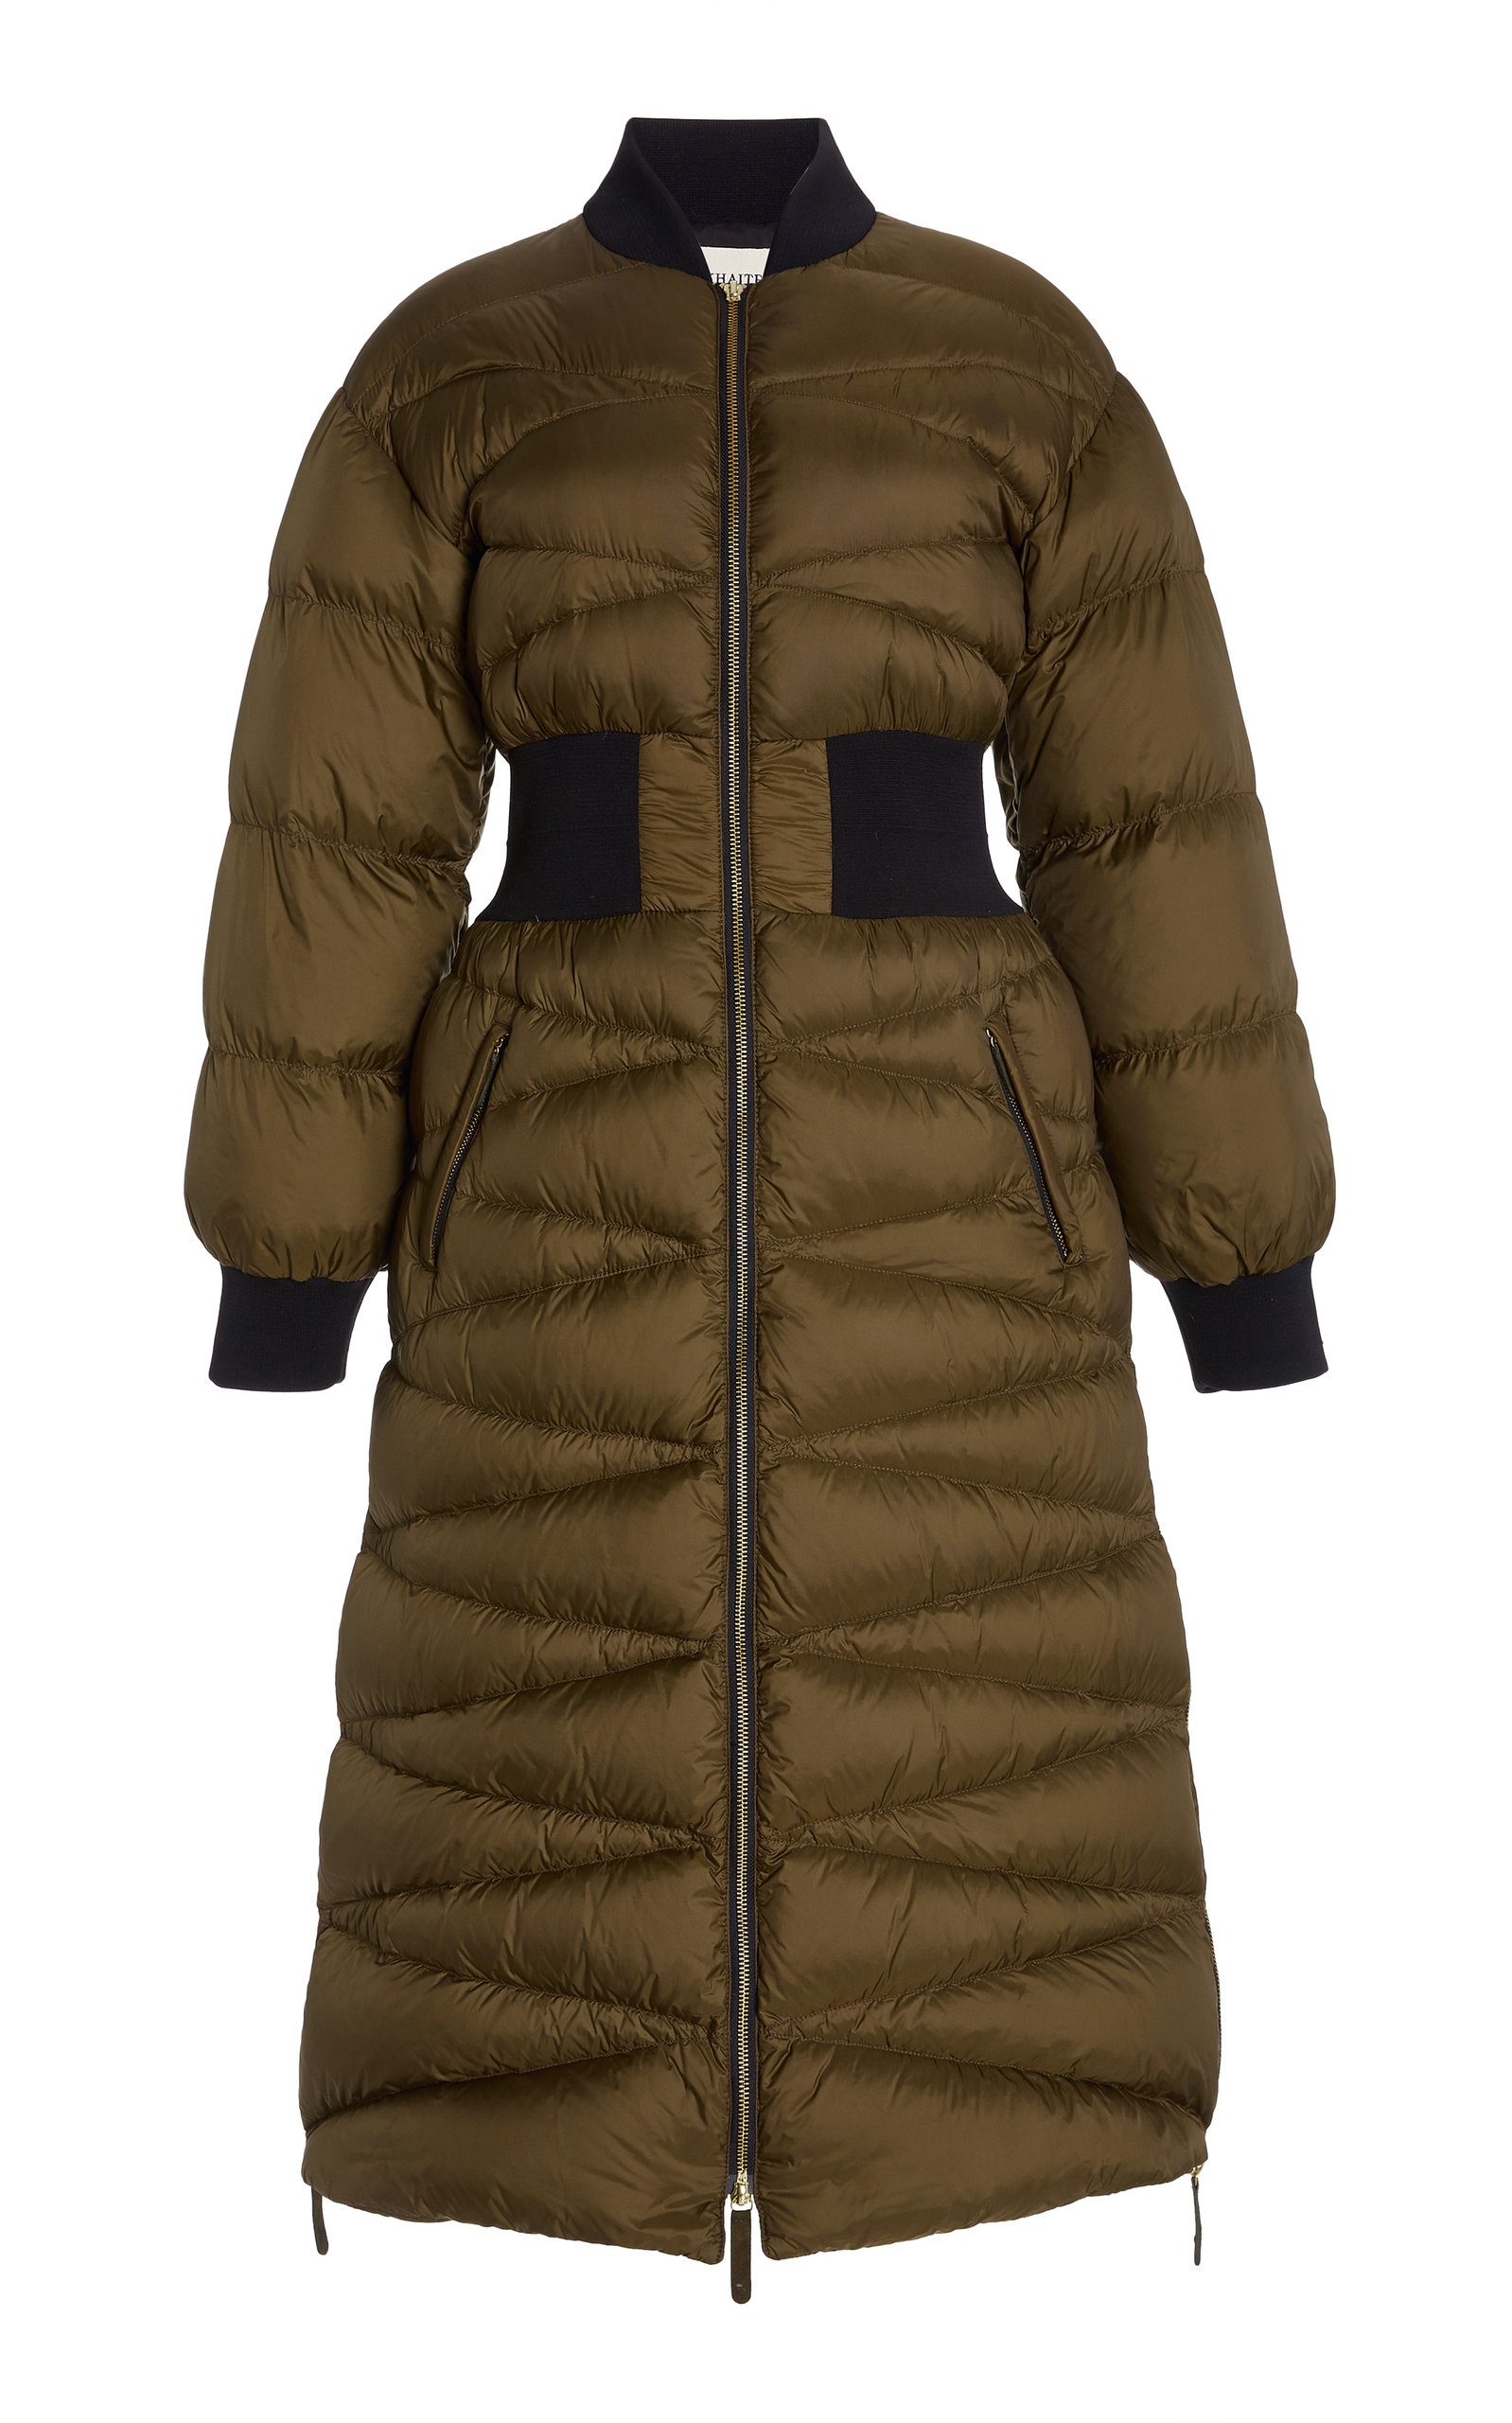 Khaite Women's Jermaine Quilted Nylon Puffer Coat